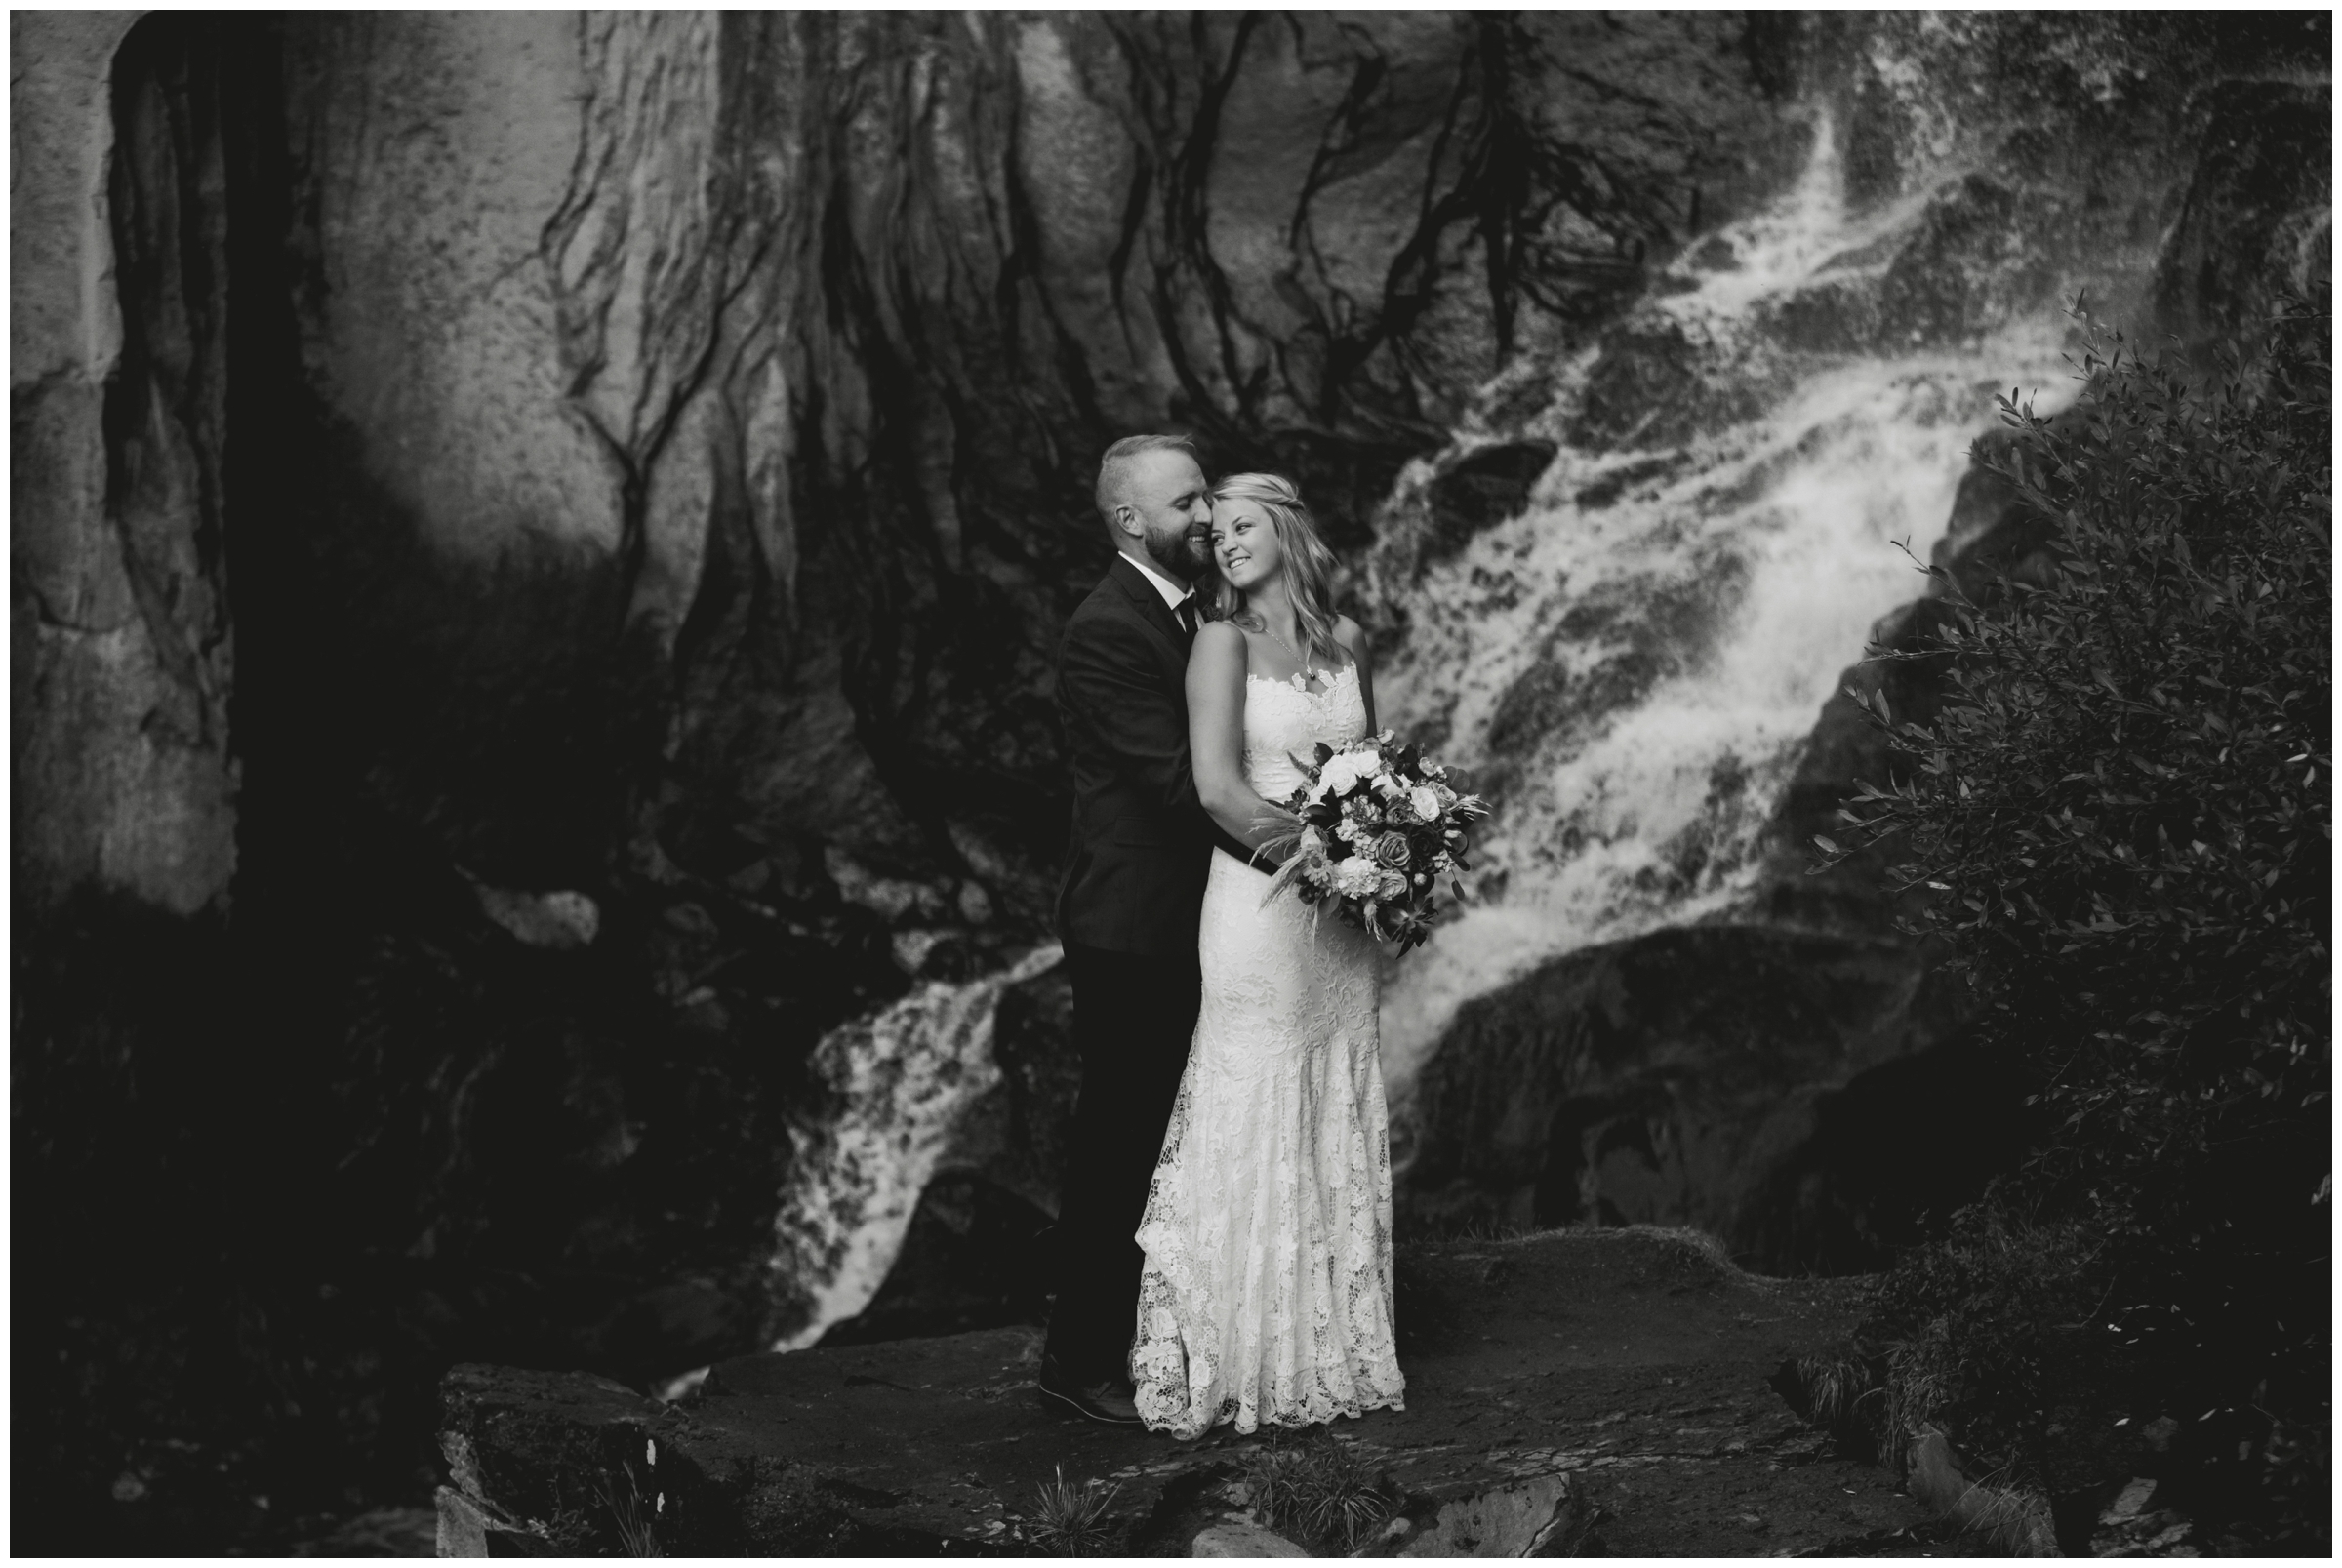 Colorado elopement photos by Breckenridge photographer Plum Pretty Photography. Adventure waterfall wedding inspiration in Creede, CO.